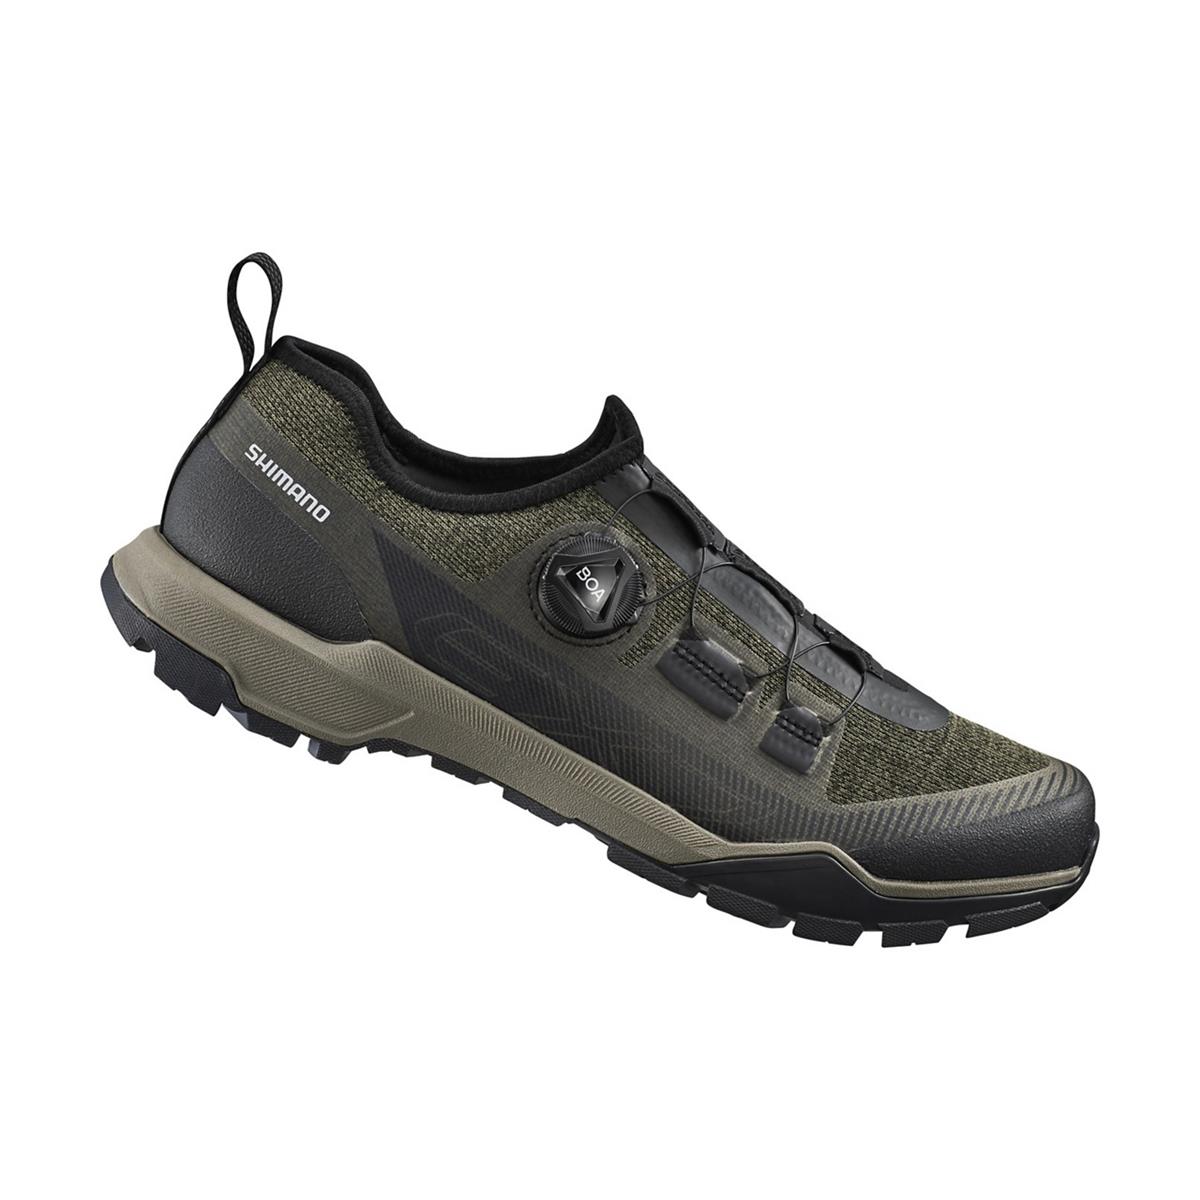 Trekking / MTB Shoes SH-EX700 Green Size 48